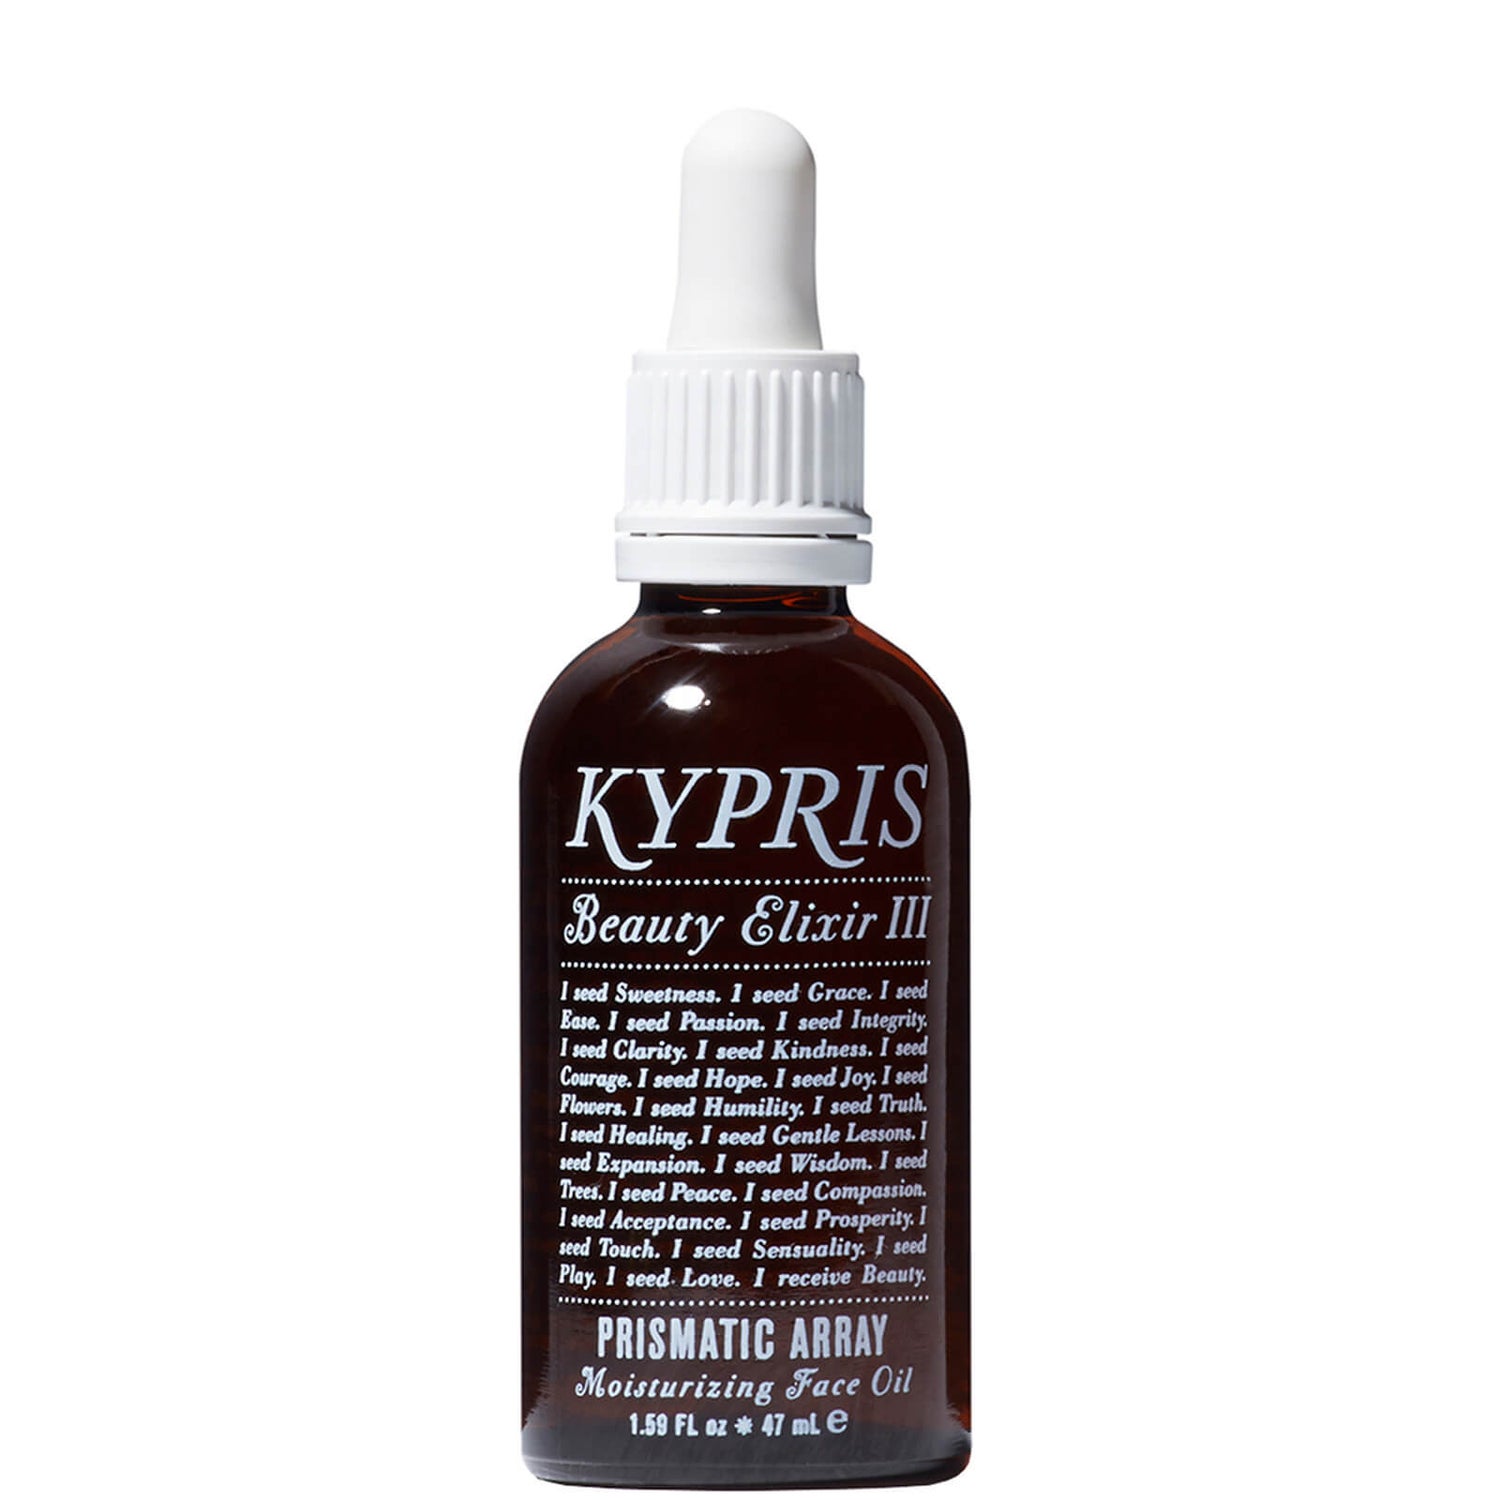 Kypris Beauty Elixir III : Prismatic Array